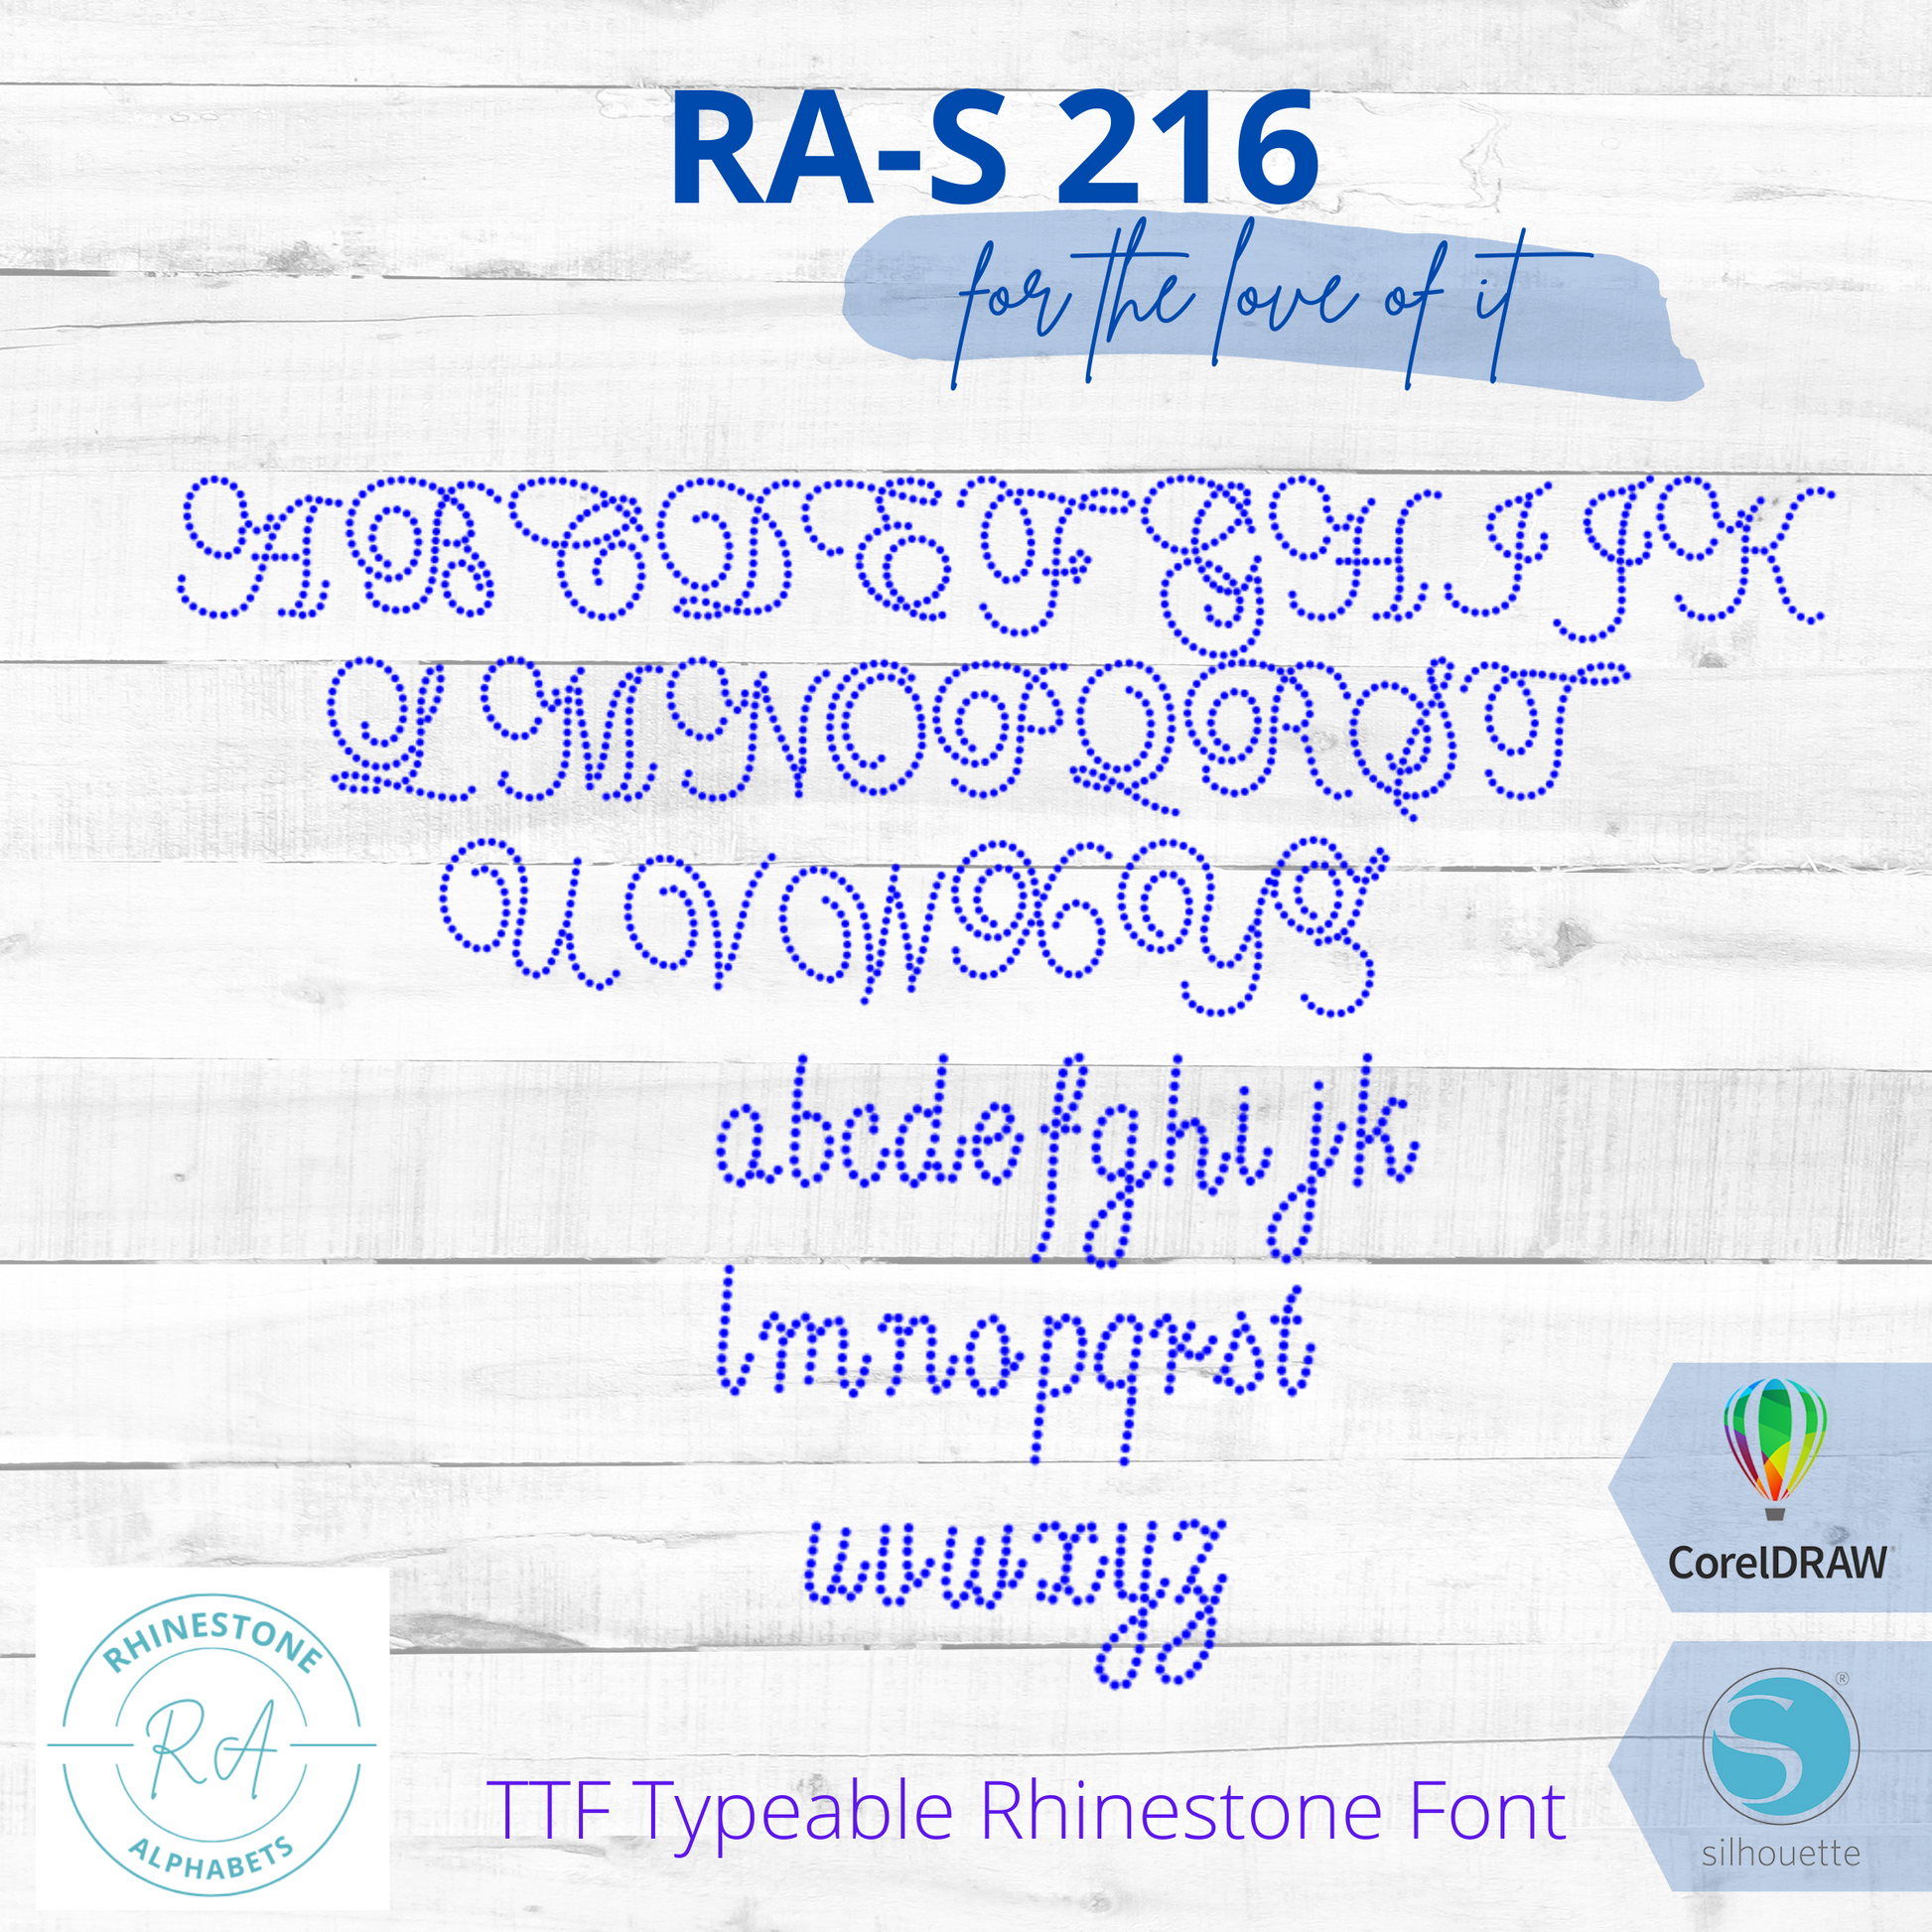 RA-S 216 - RhinestoneAlphabets